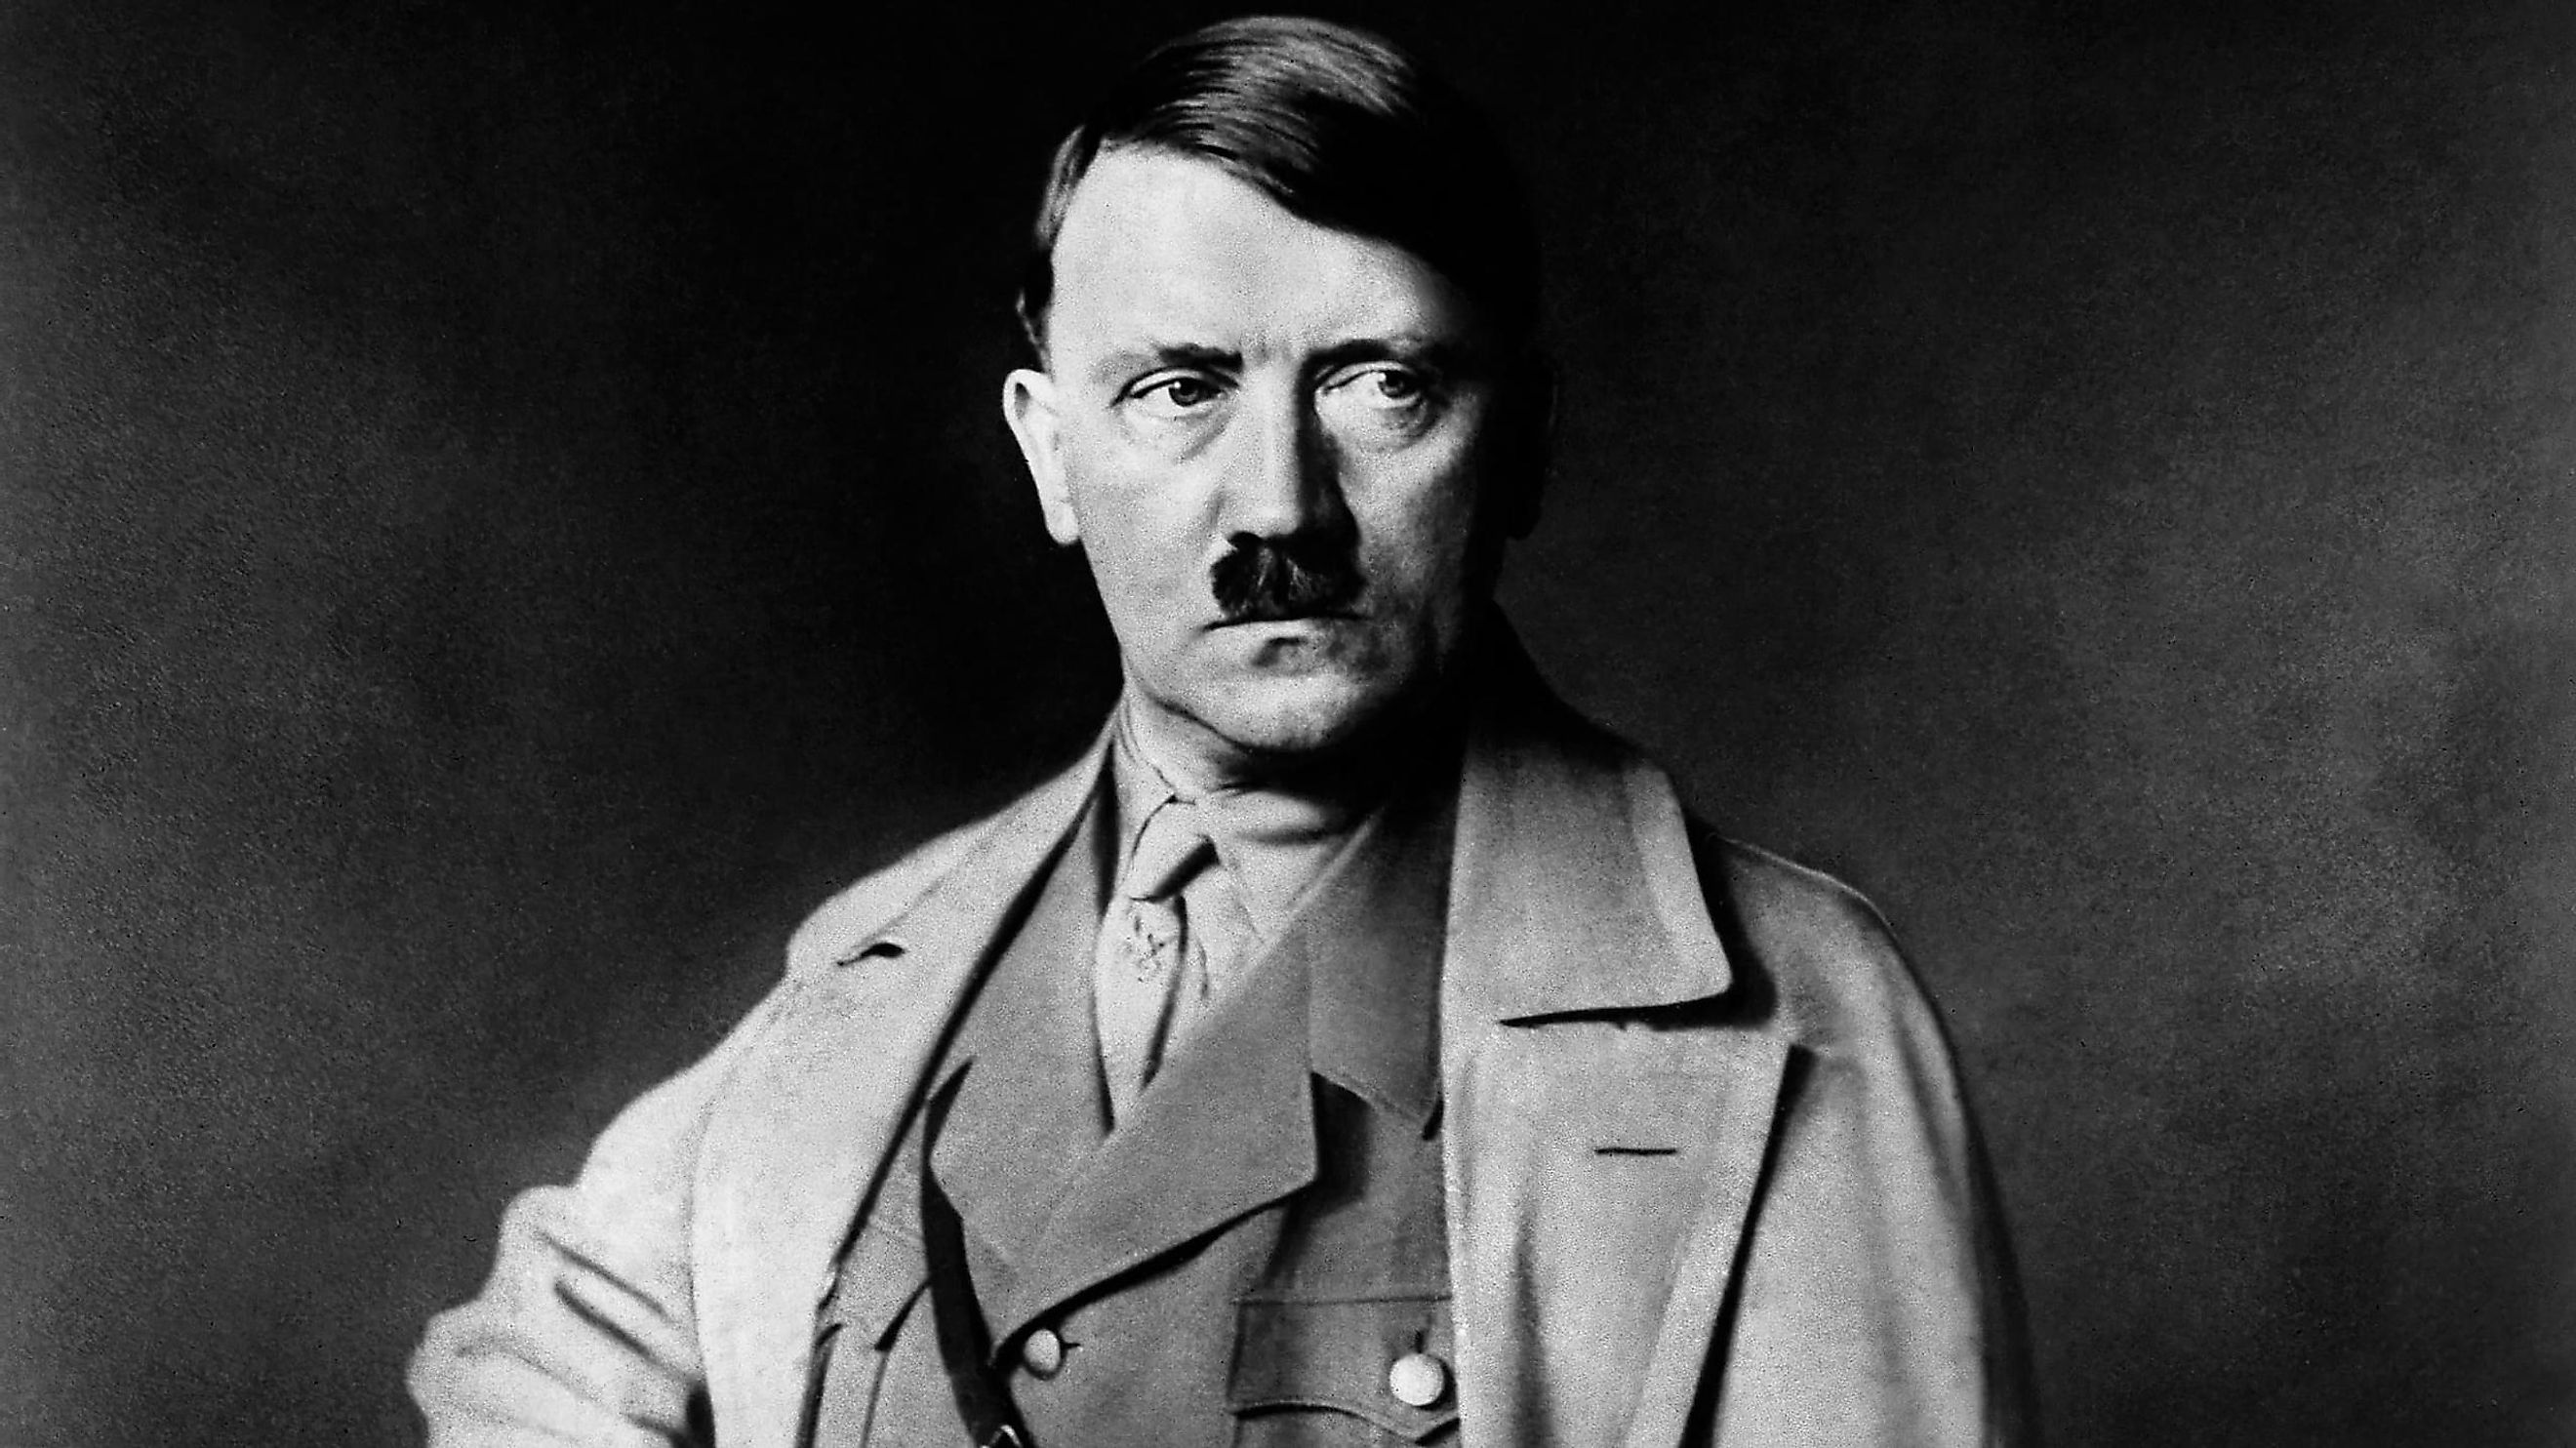 Portrait of Adolf Hitler. Editorial credit: murathakanart / Shutterstock.com